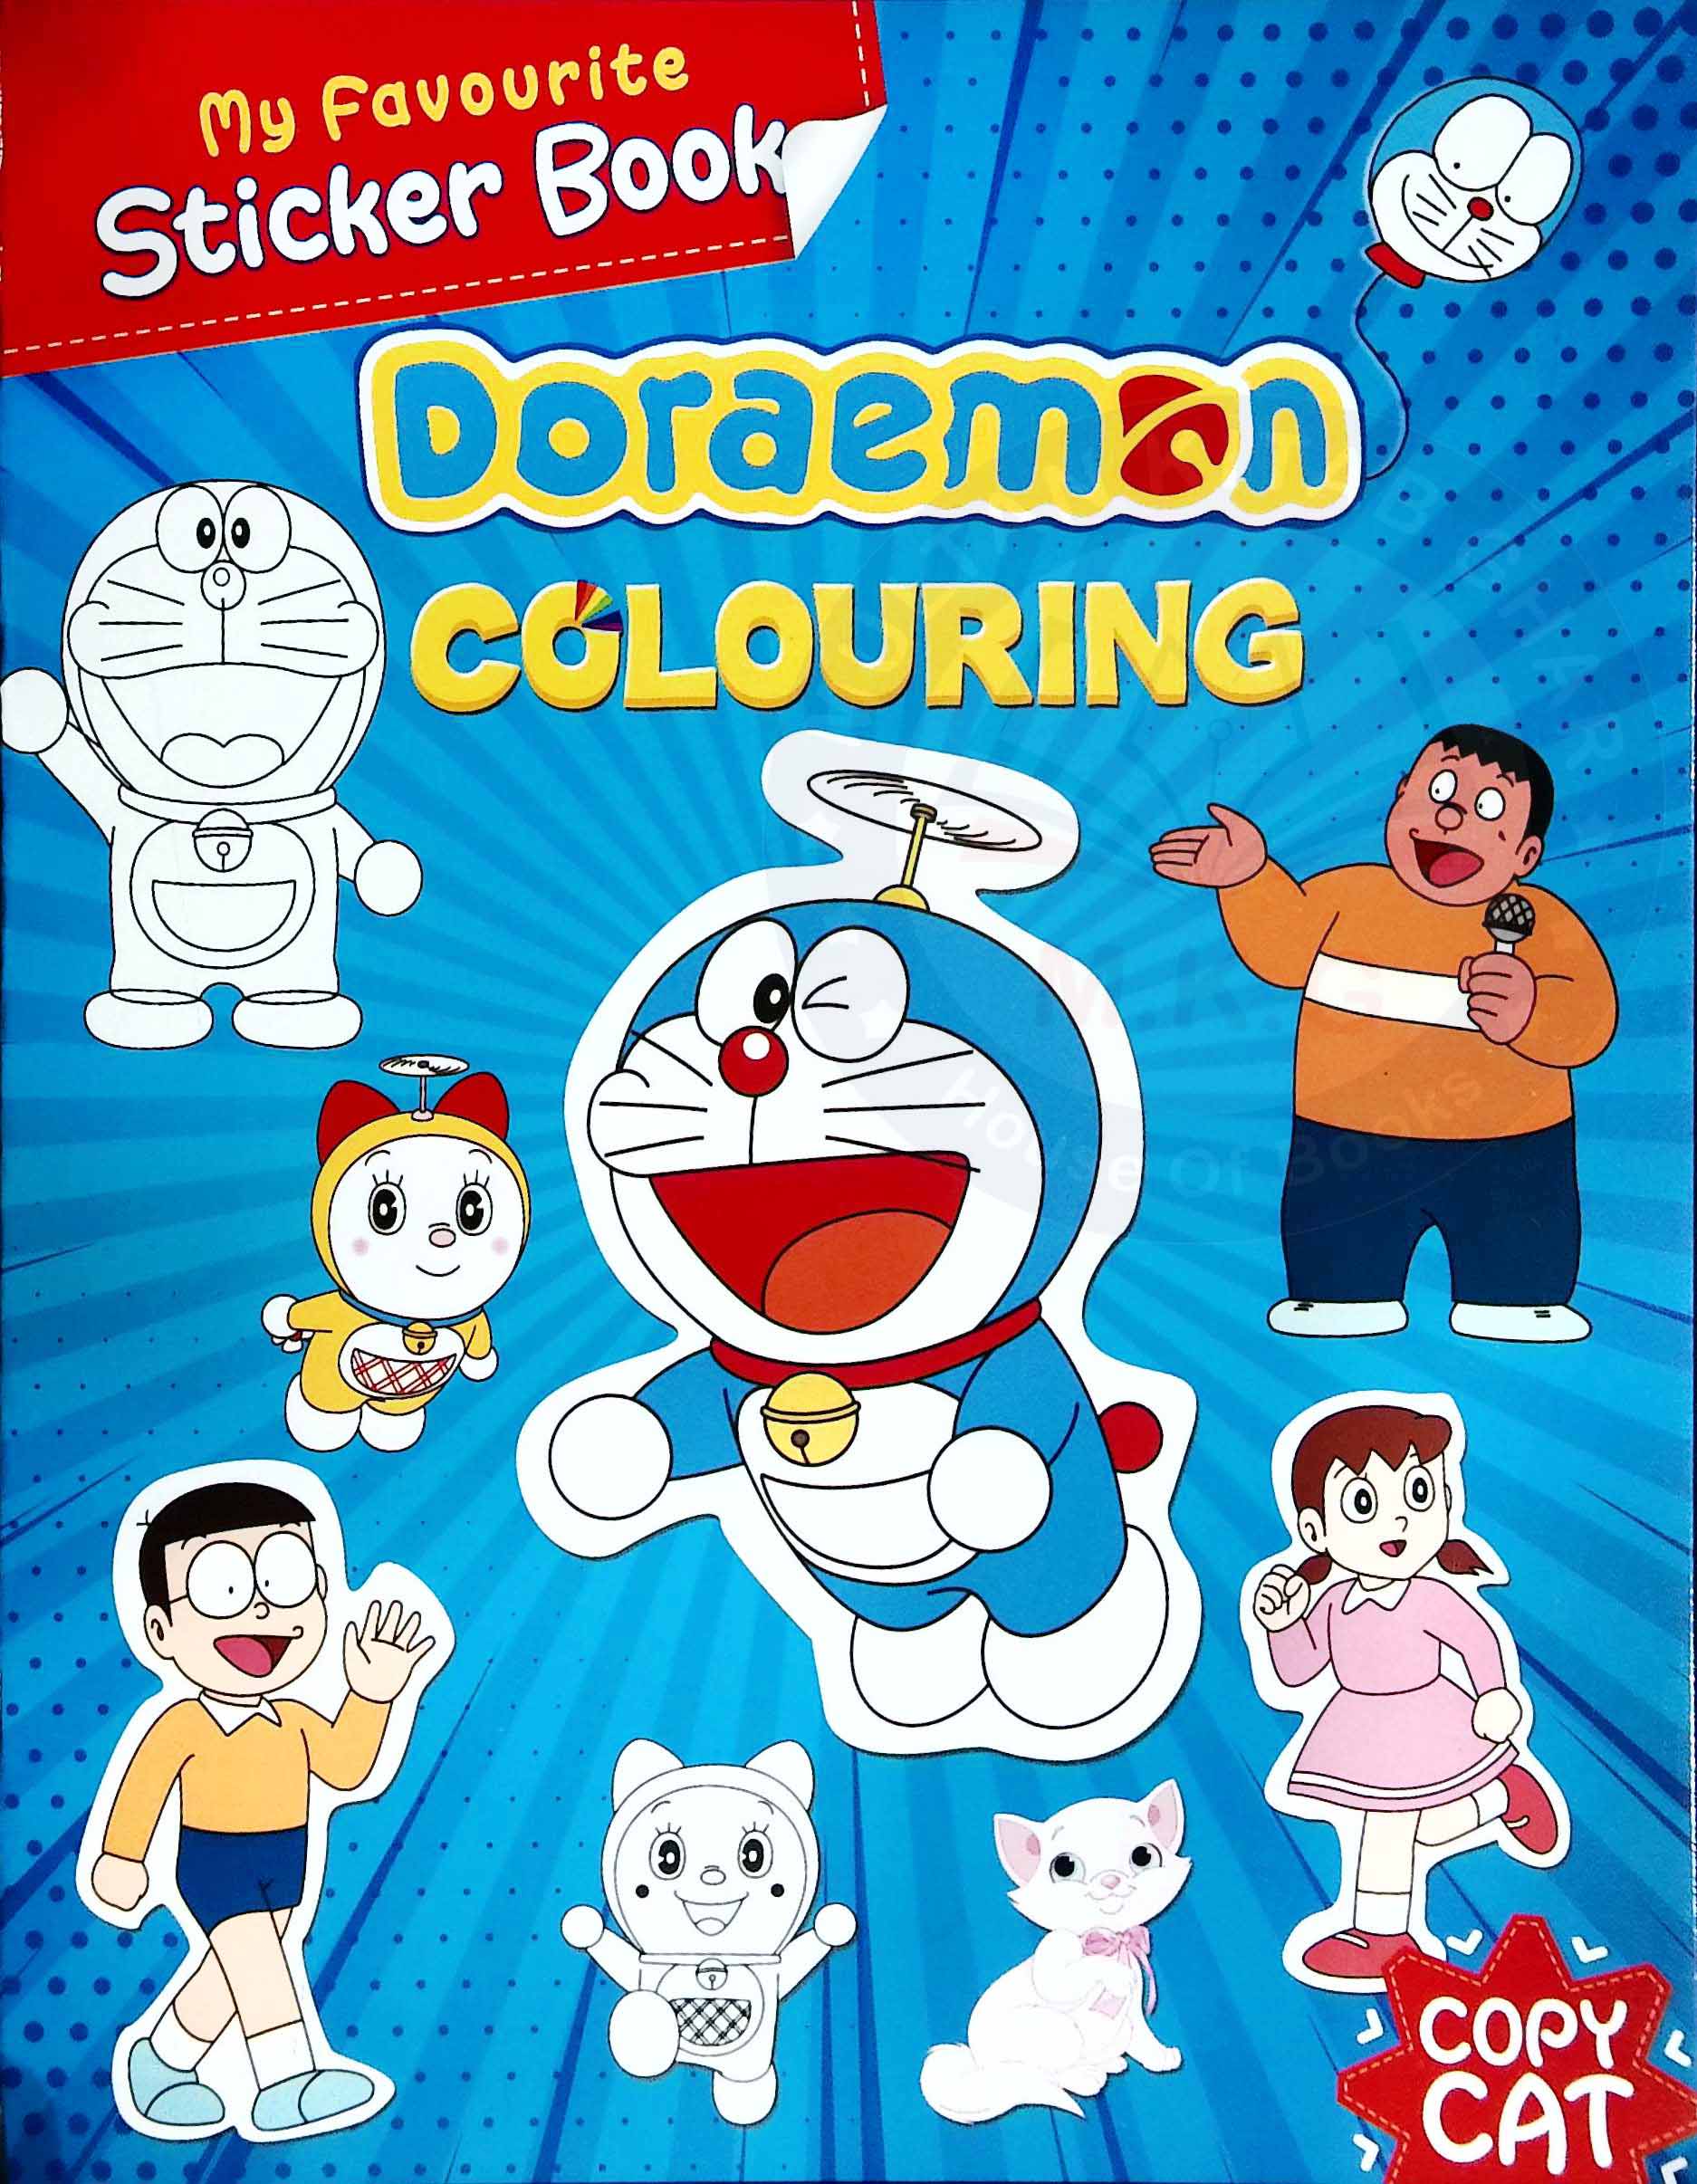 My Favorite Sticker Book Doraemon Coloring Copycat By Kidbiz - Pak Army  Ranks